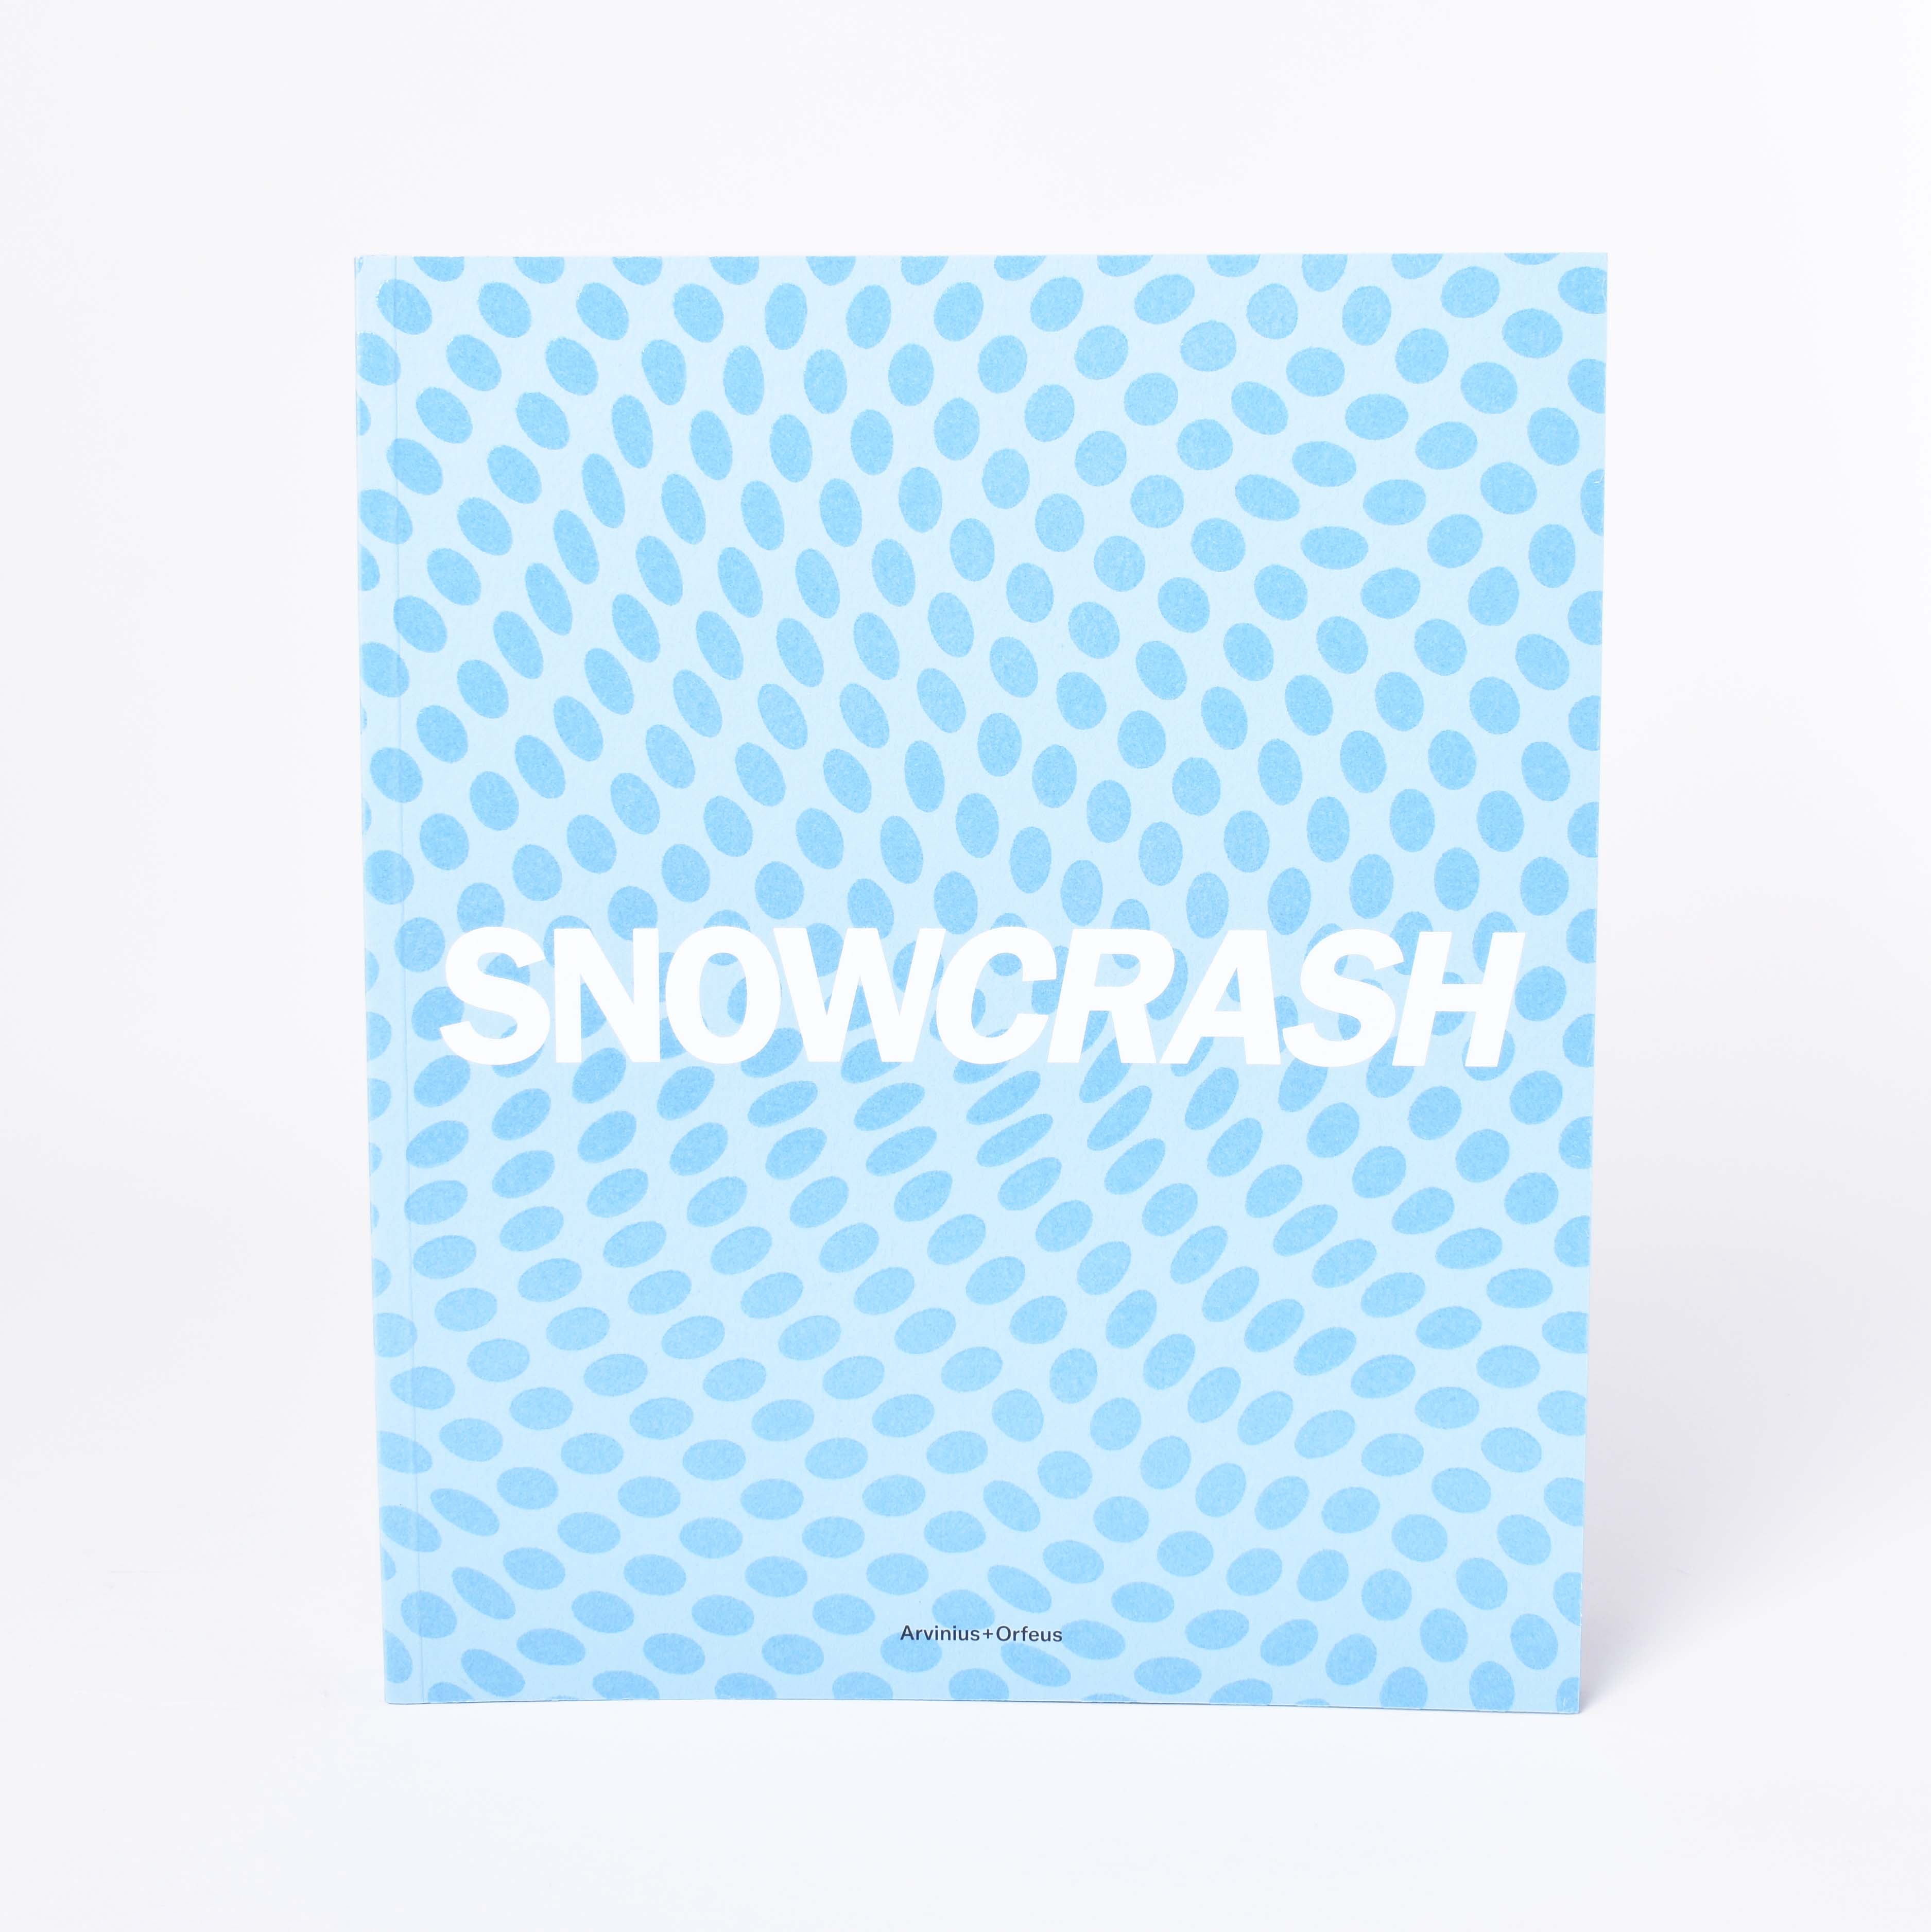 snowcrash-designbok-framsidaFramsida till boken Snowcrash av Gustav Kjellin